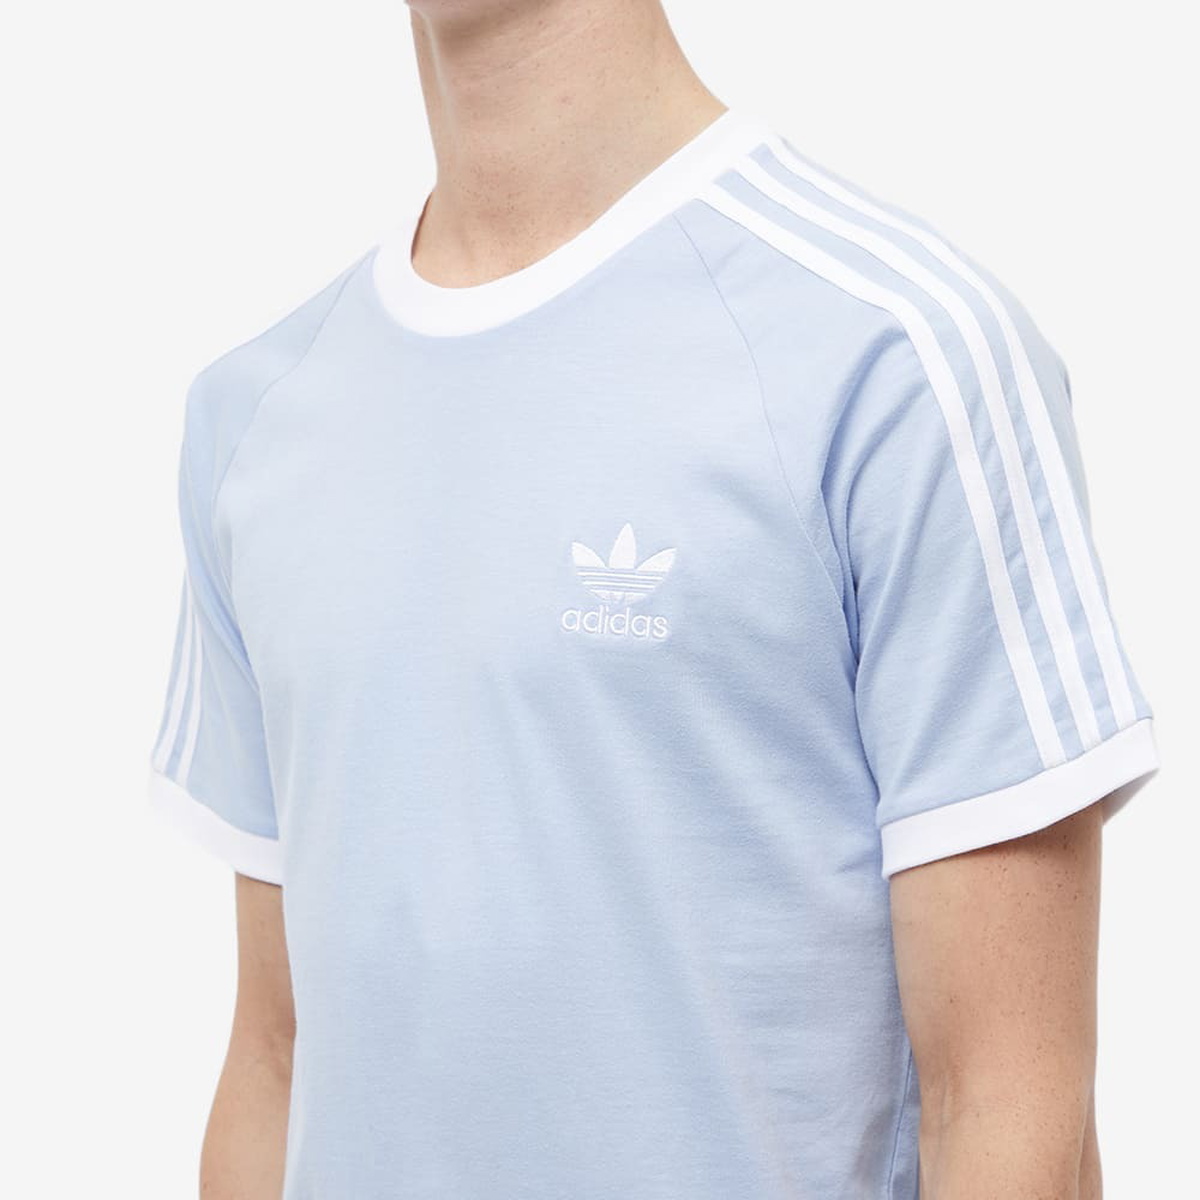 Adidas Men's 3-Stripes T-Shirt in Blue Dawn adidas